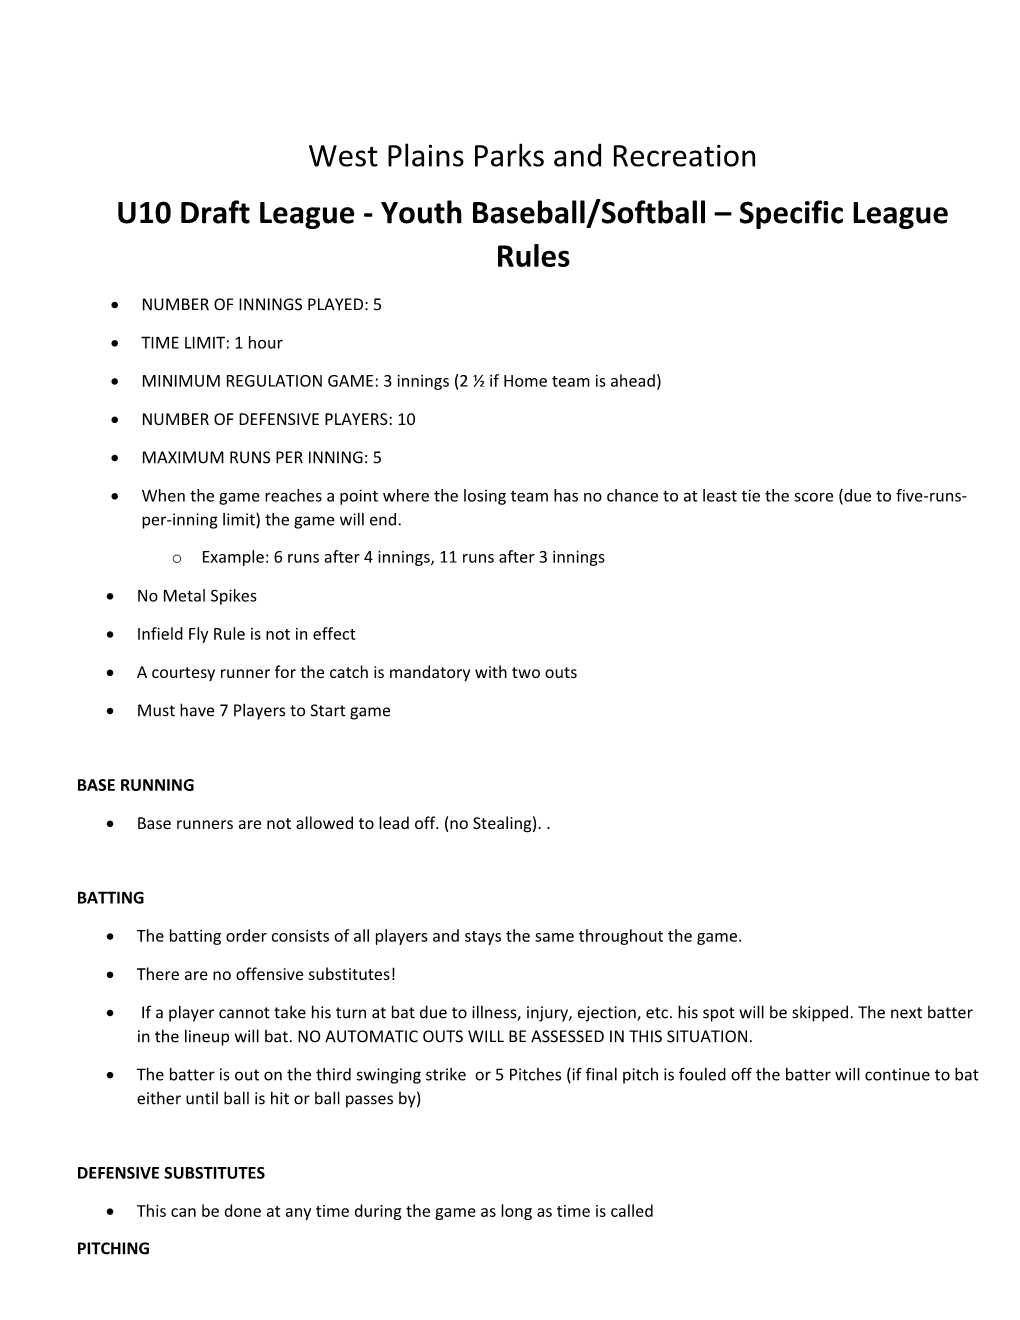 U10 Draft League - Youth Baseball/Softball Specific League Rules